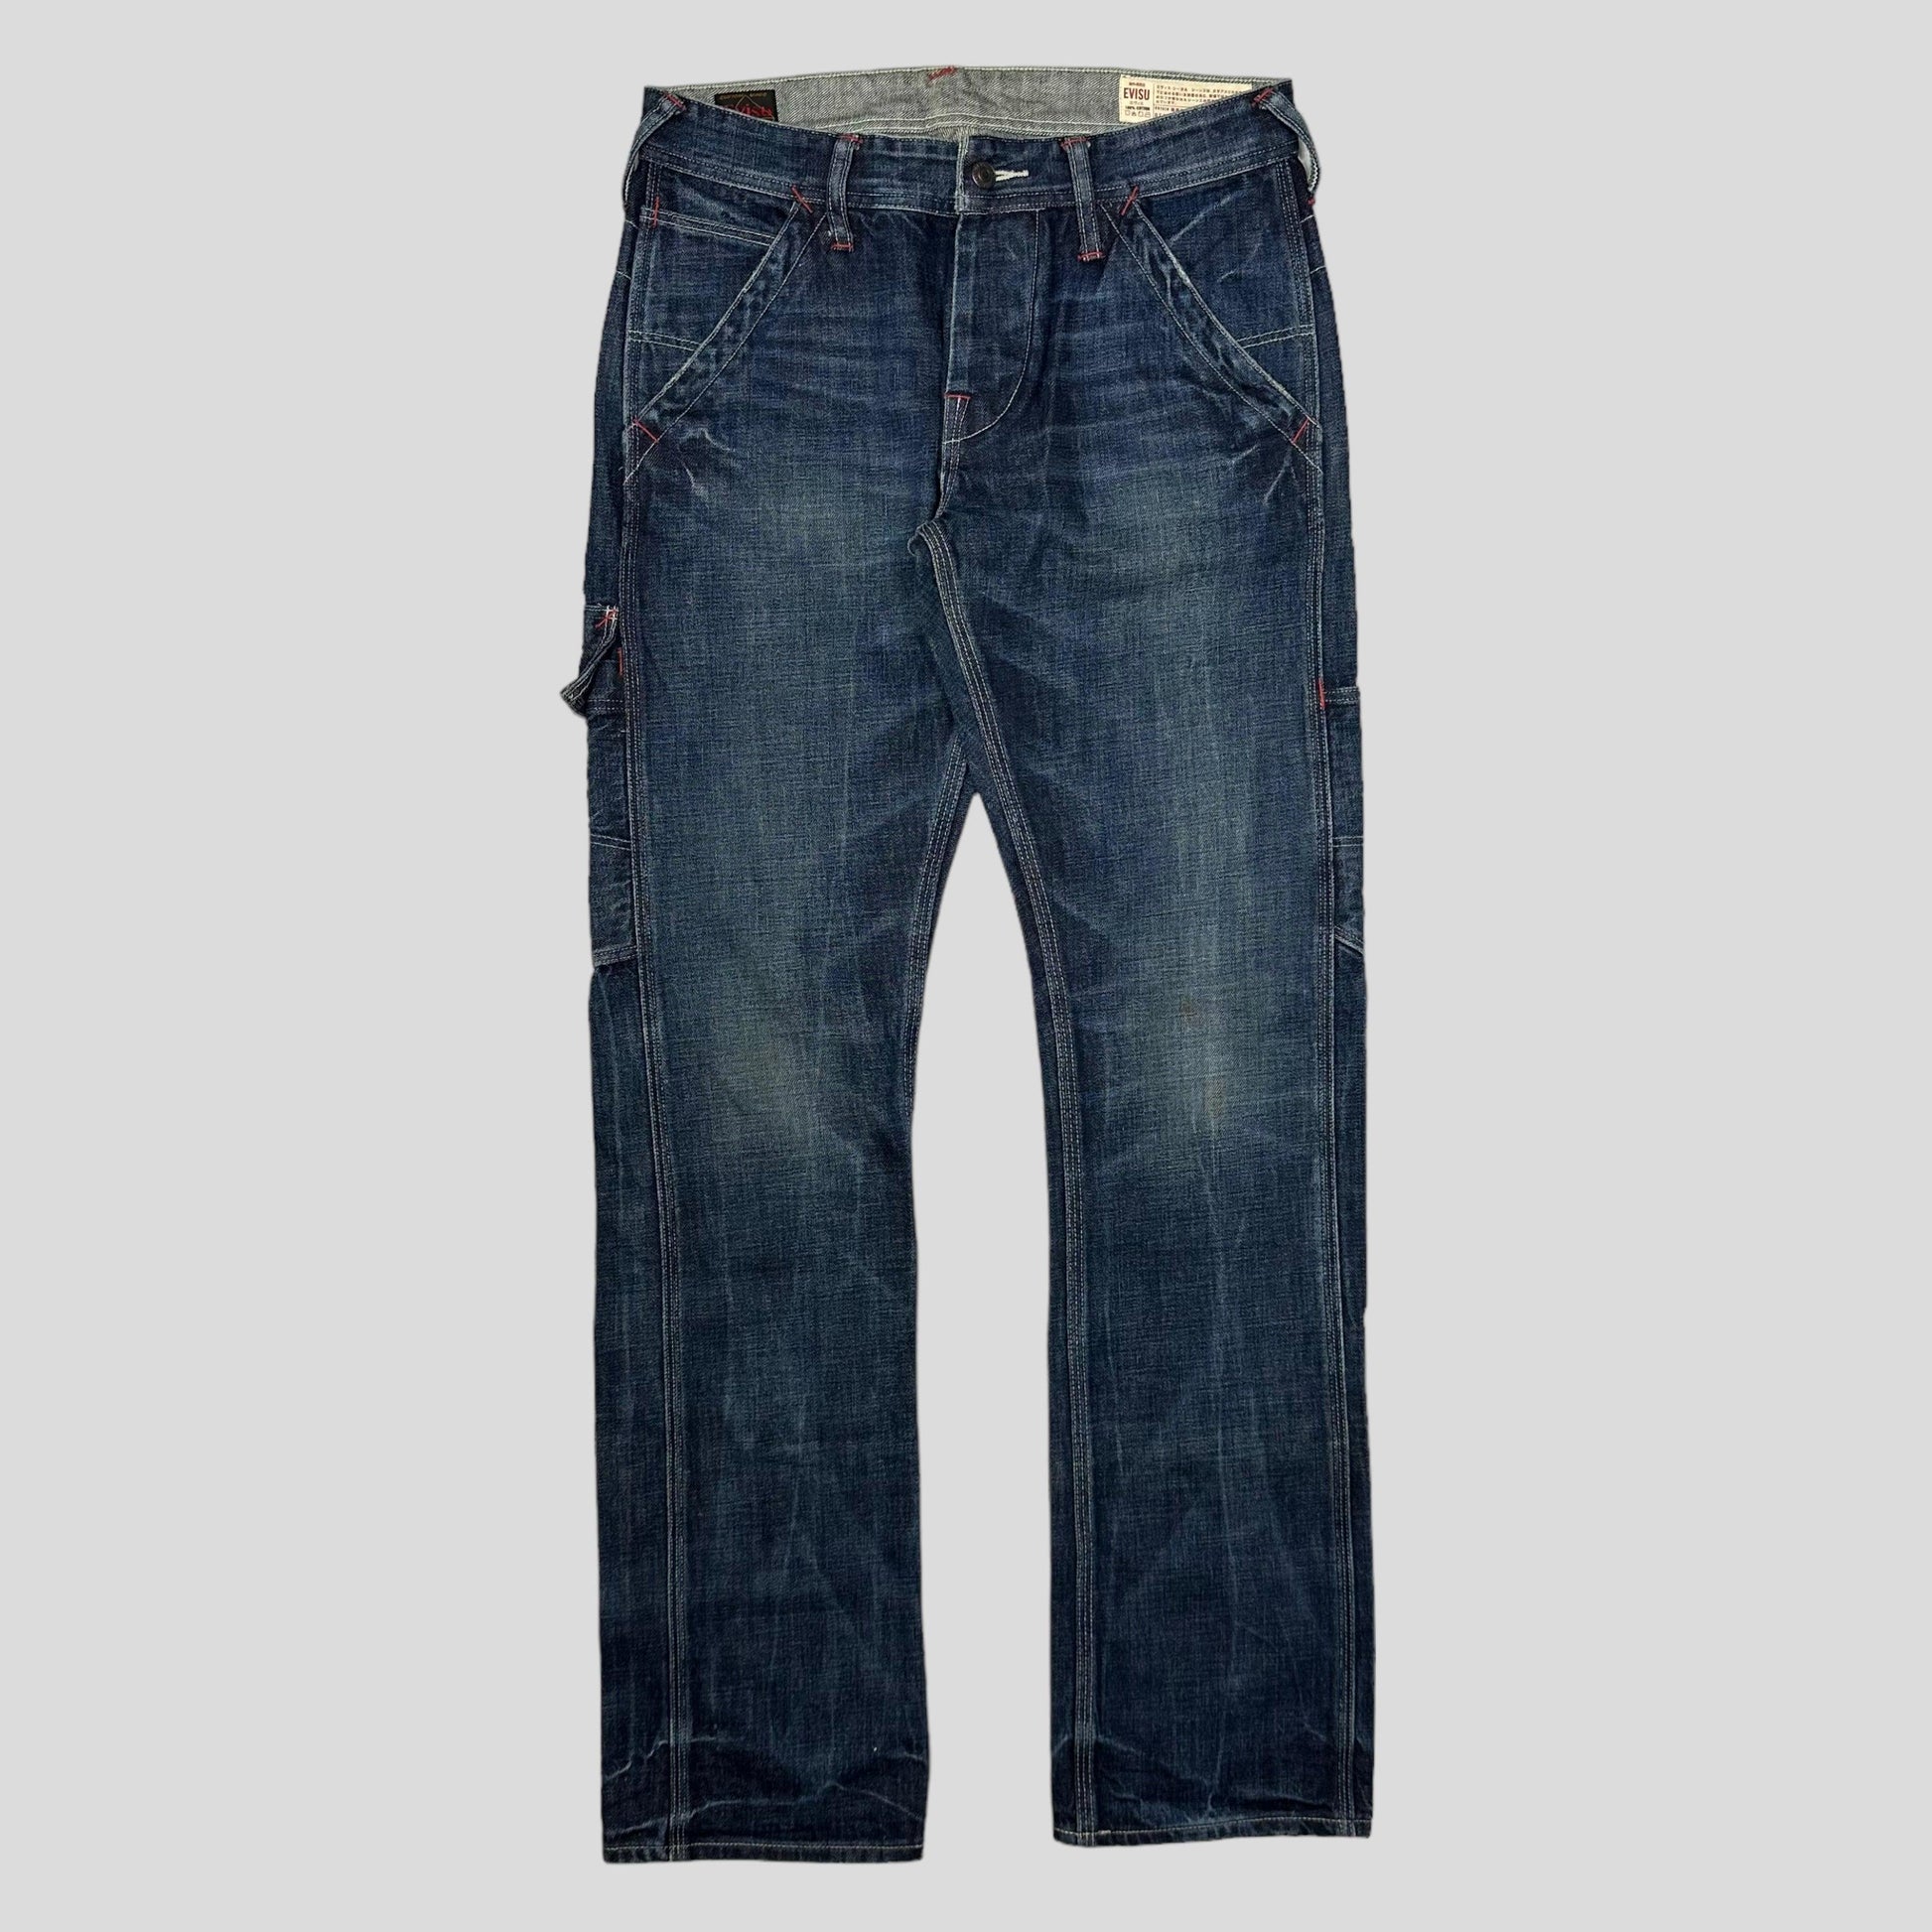 Evisu 00’s Denim Carpenter Jeans - 30-31 - Known Source